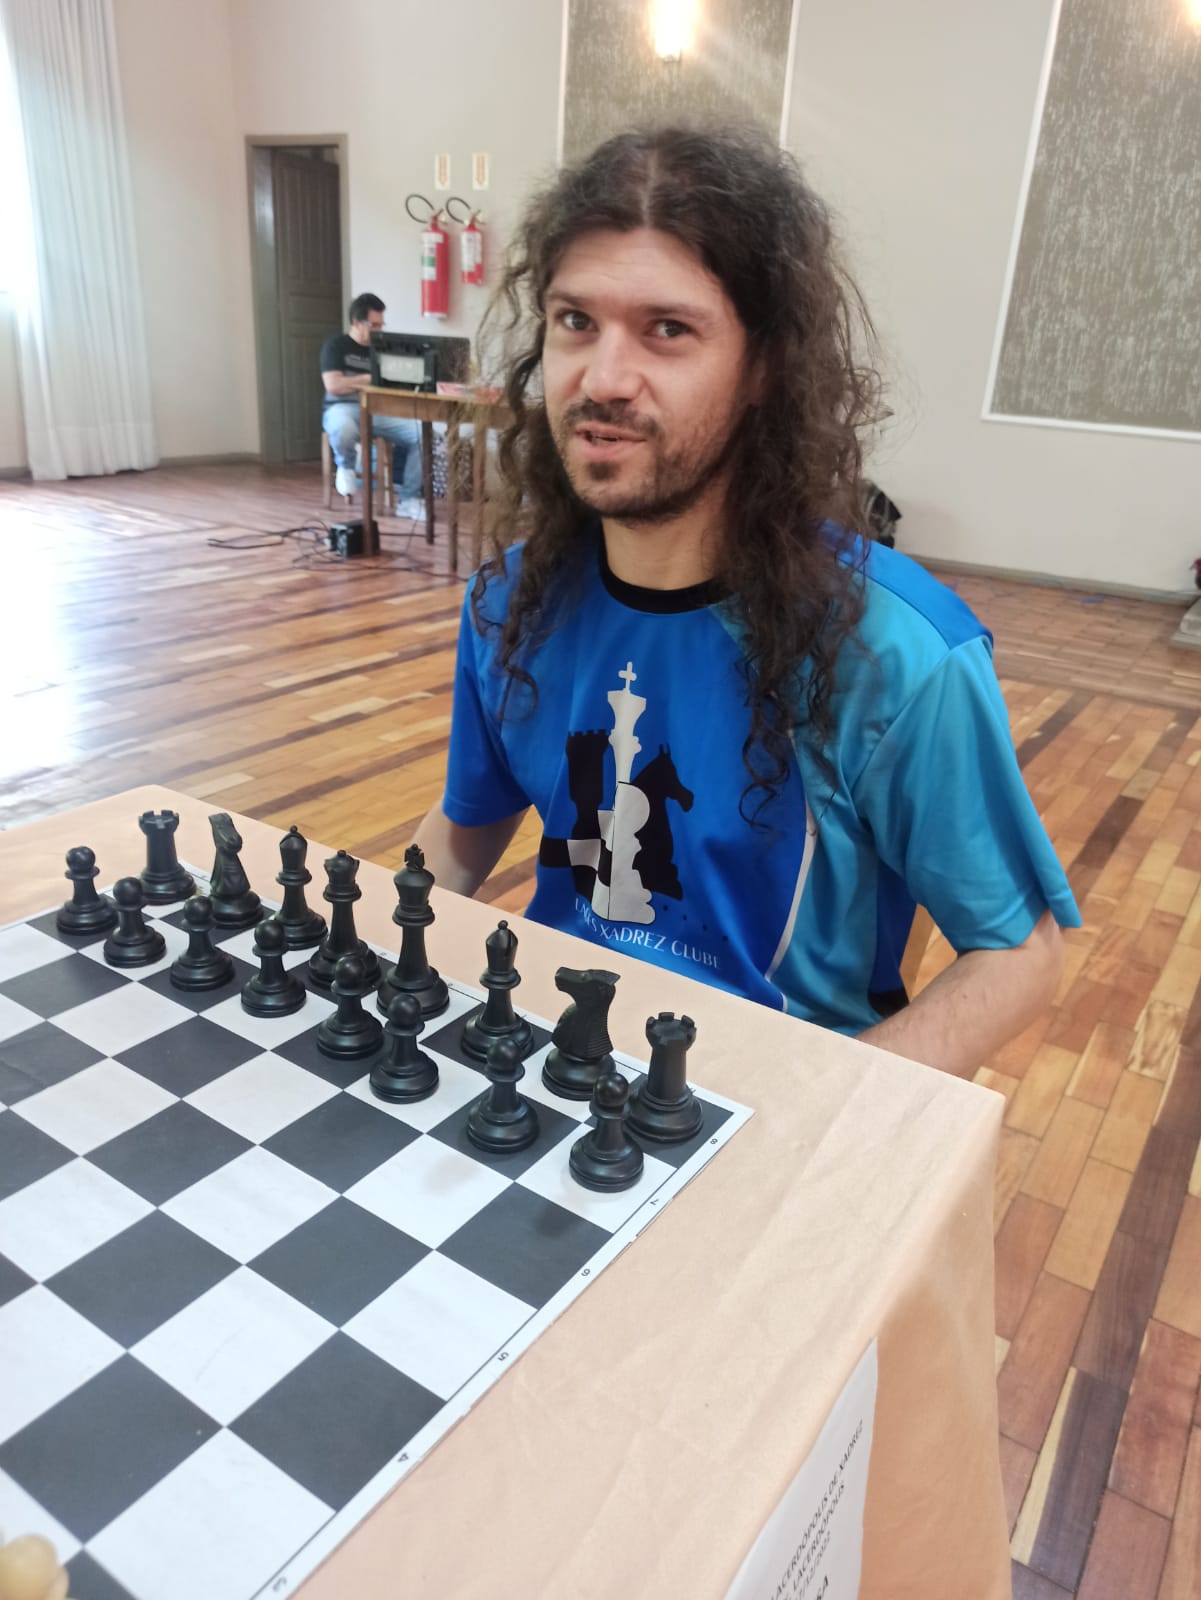 Xadrez lageano disputa torneio internacional na capital – Notícia